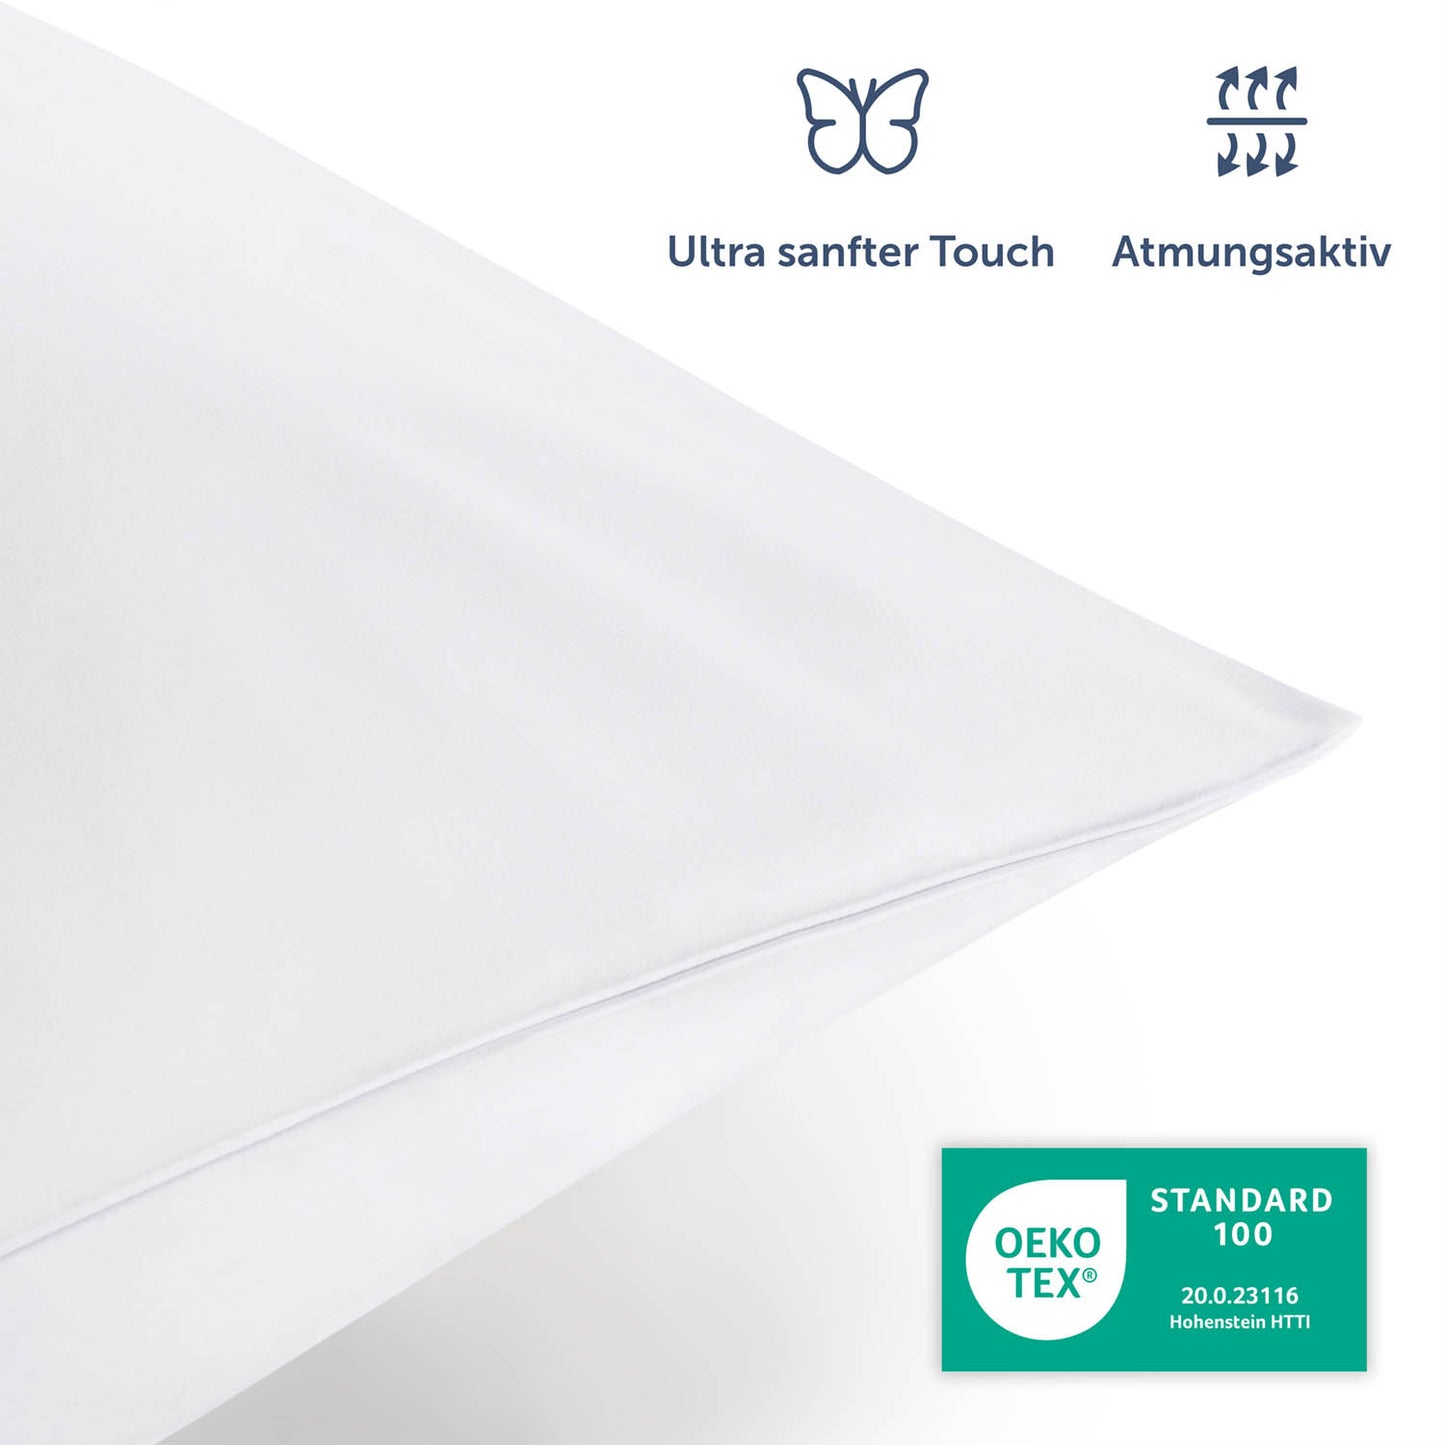 Bettbezug Set aus Mikrofaser - Superweich, Oekotex Zertifiziert, 155x220cm